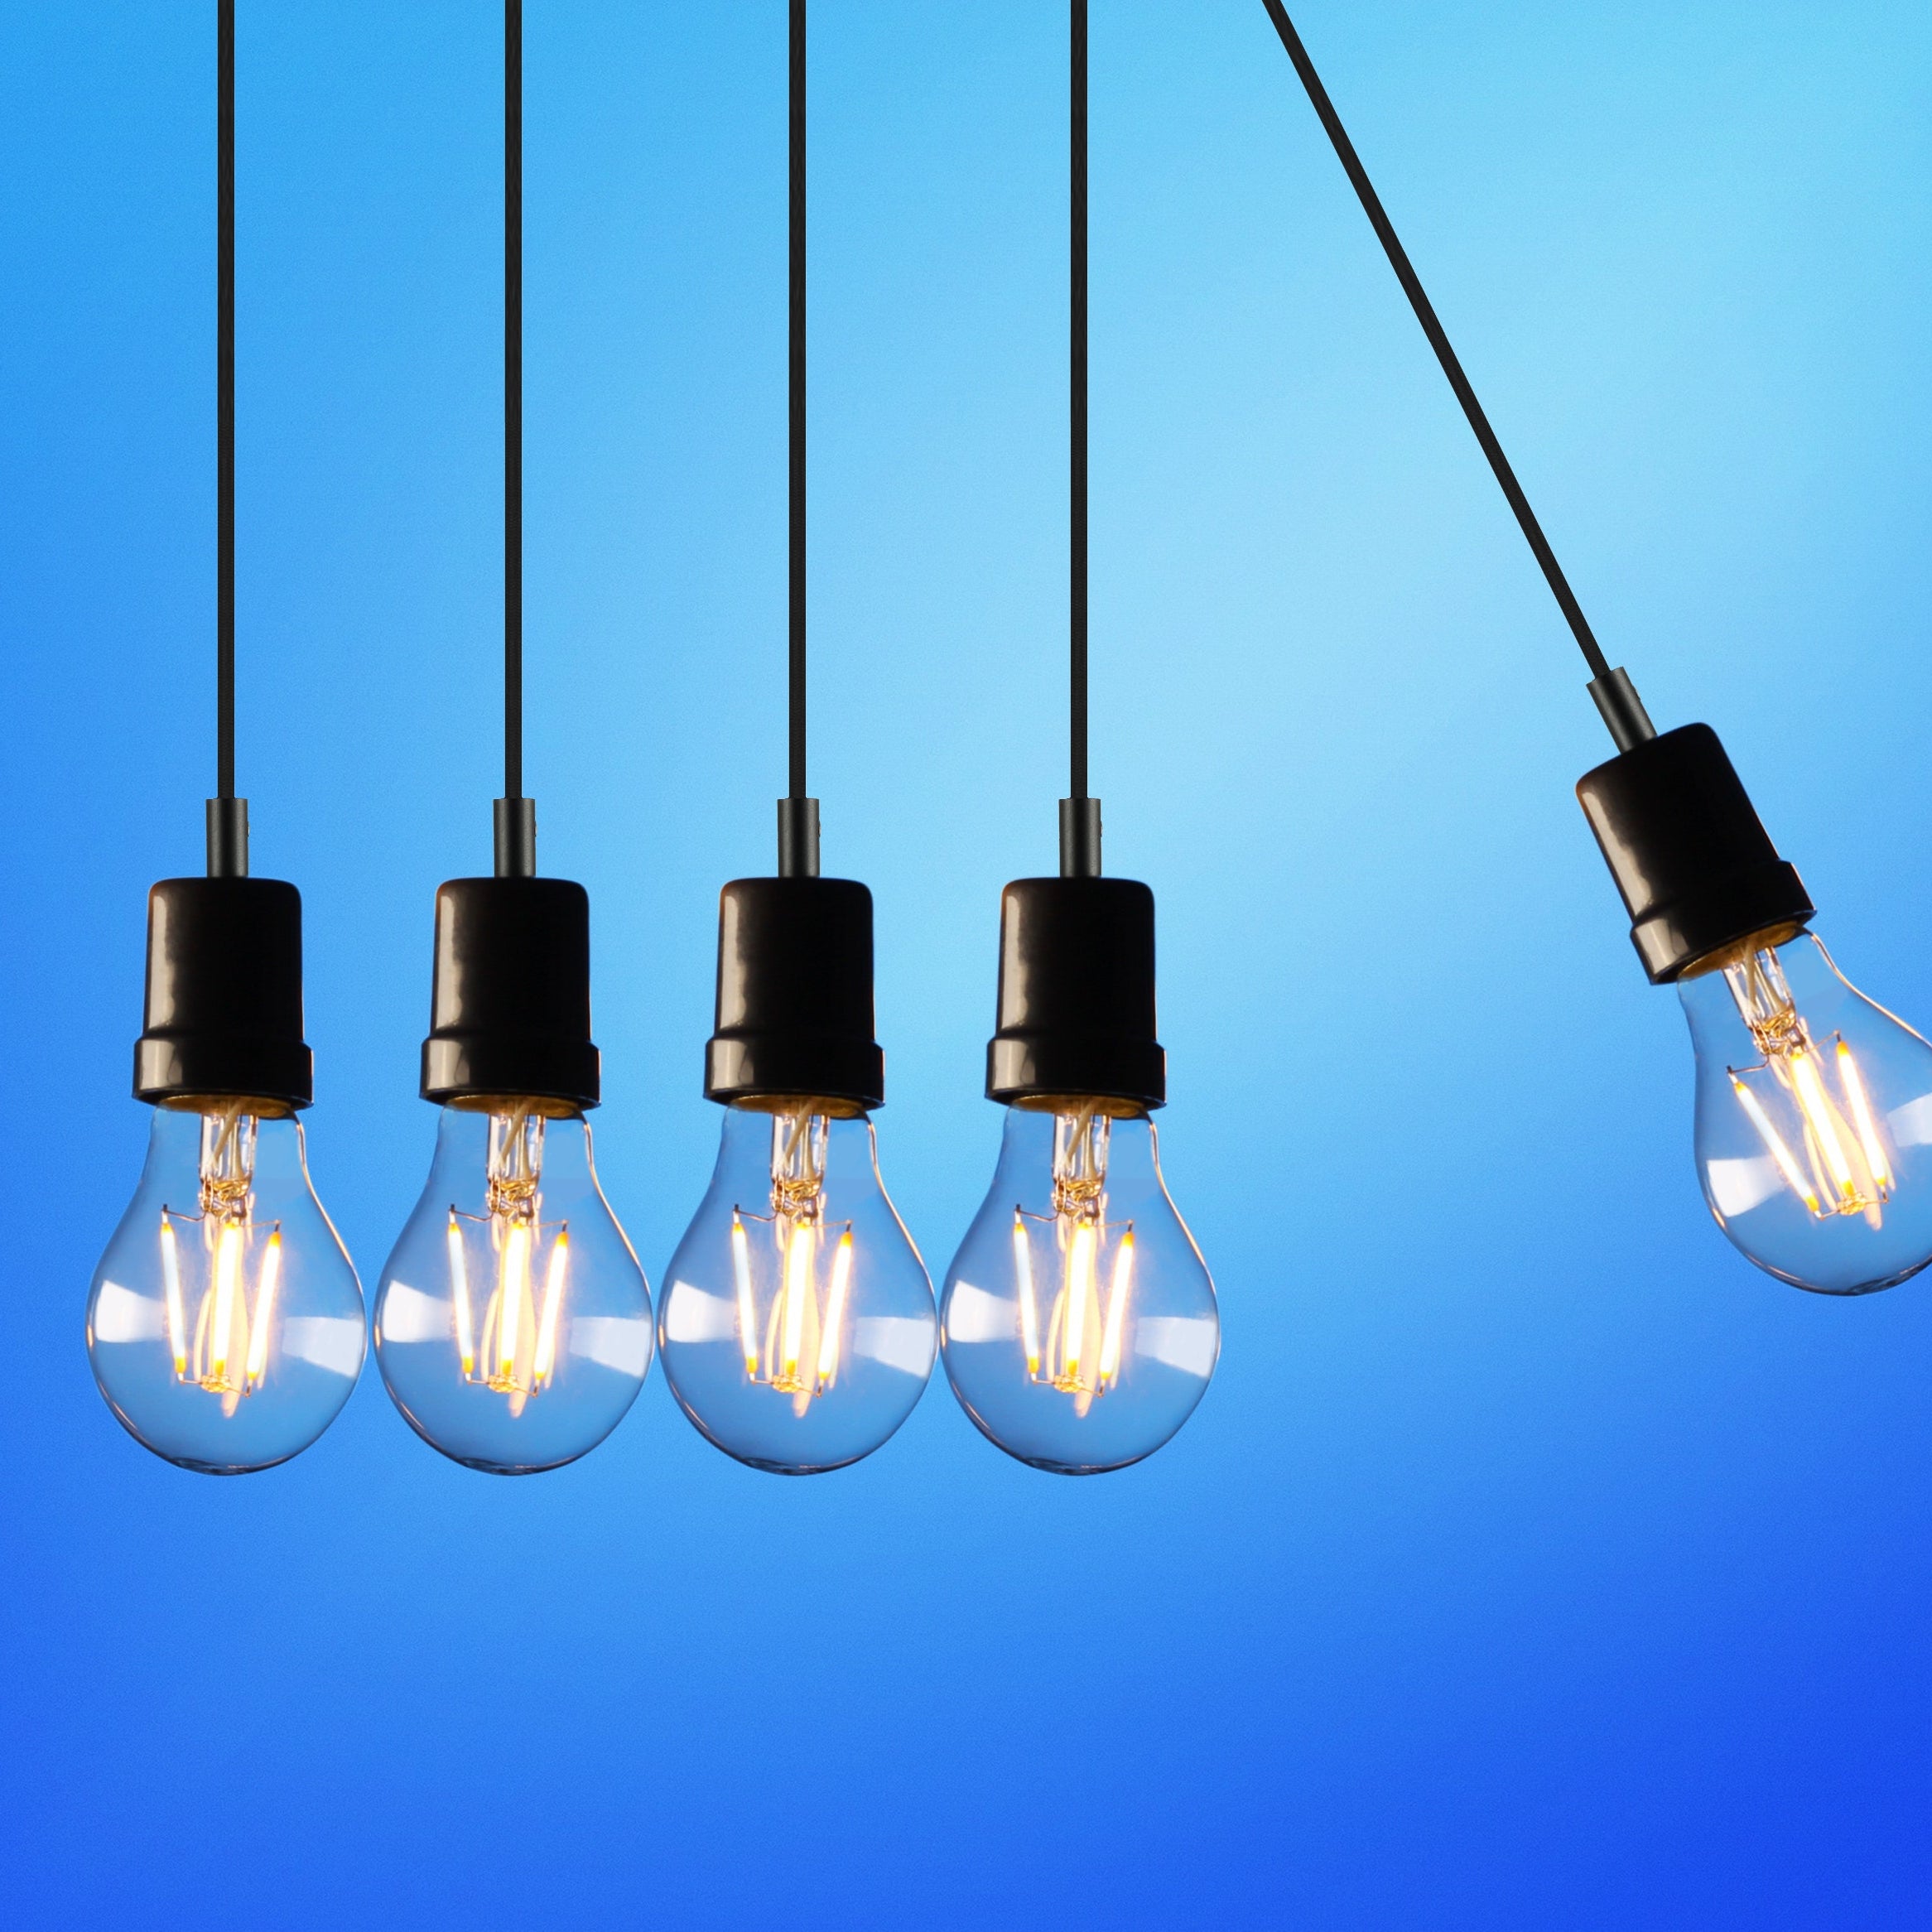 FIORE Hanging Lantern Cord Room Decor for Pendant Light Bulbs Socket - 15 Feet - Set of 1 or 5 - Black - Wallniture